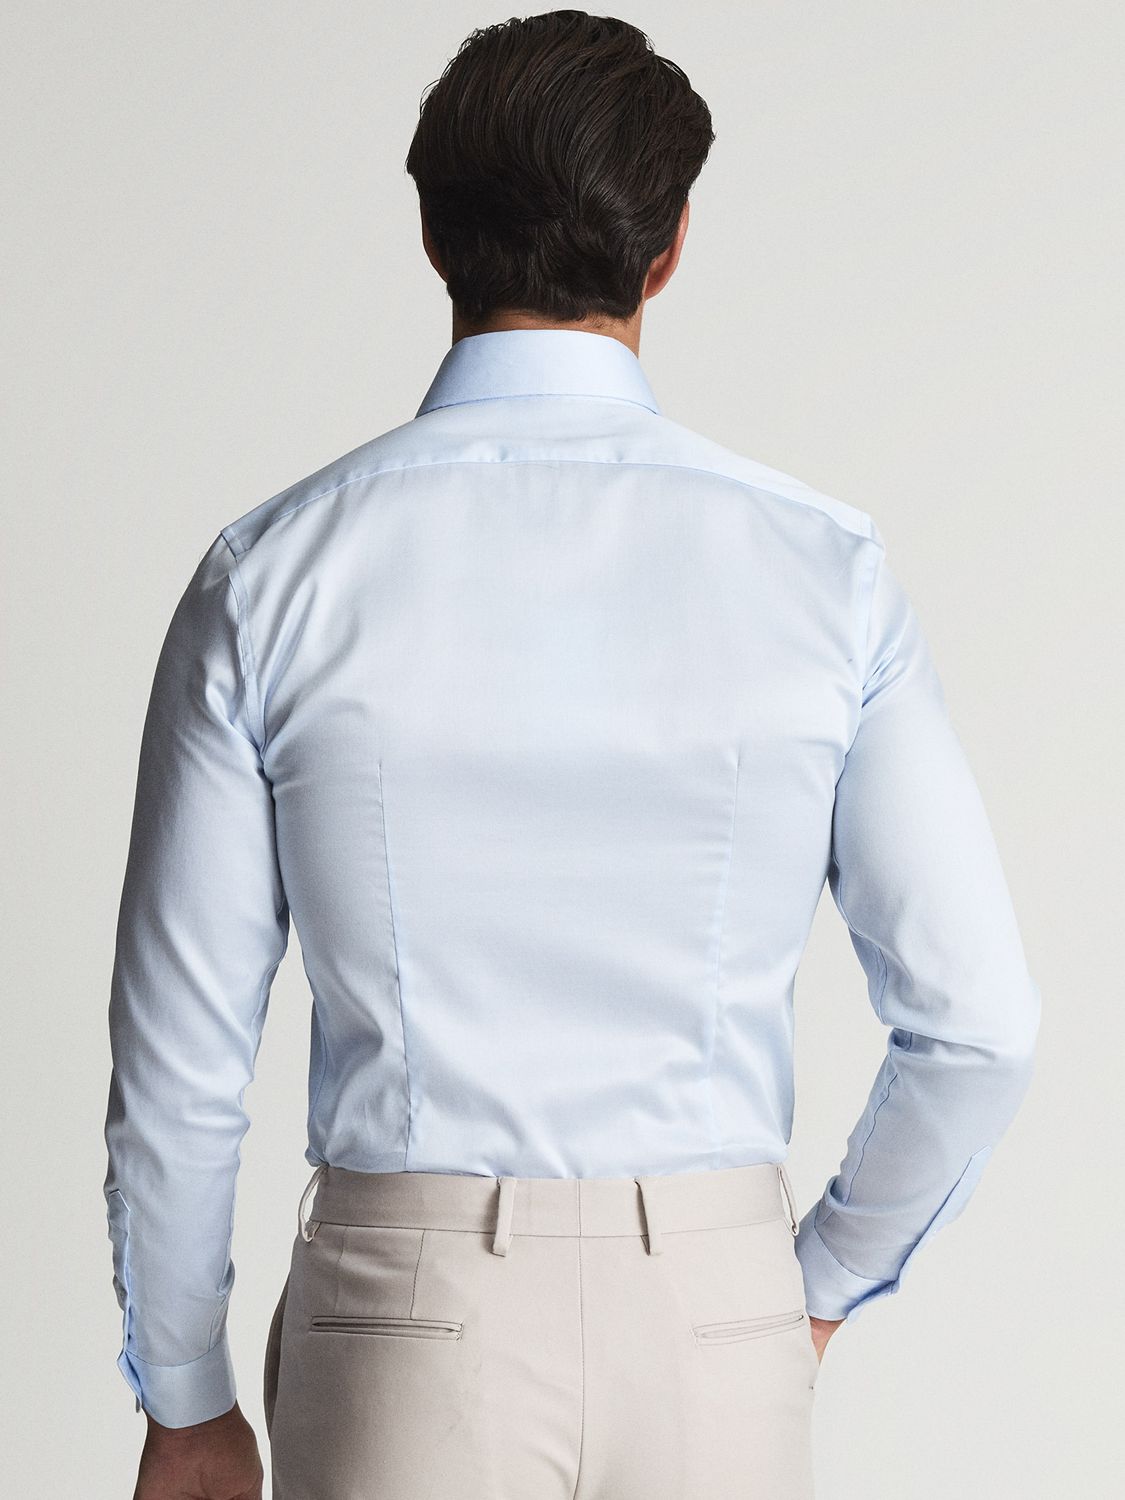 Reiss Frontier Stretch Satin Cotton Slim Fit Shirt, Blue, S